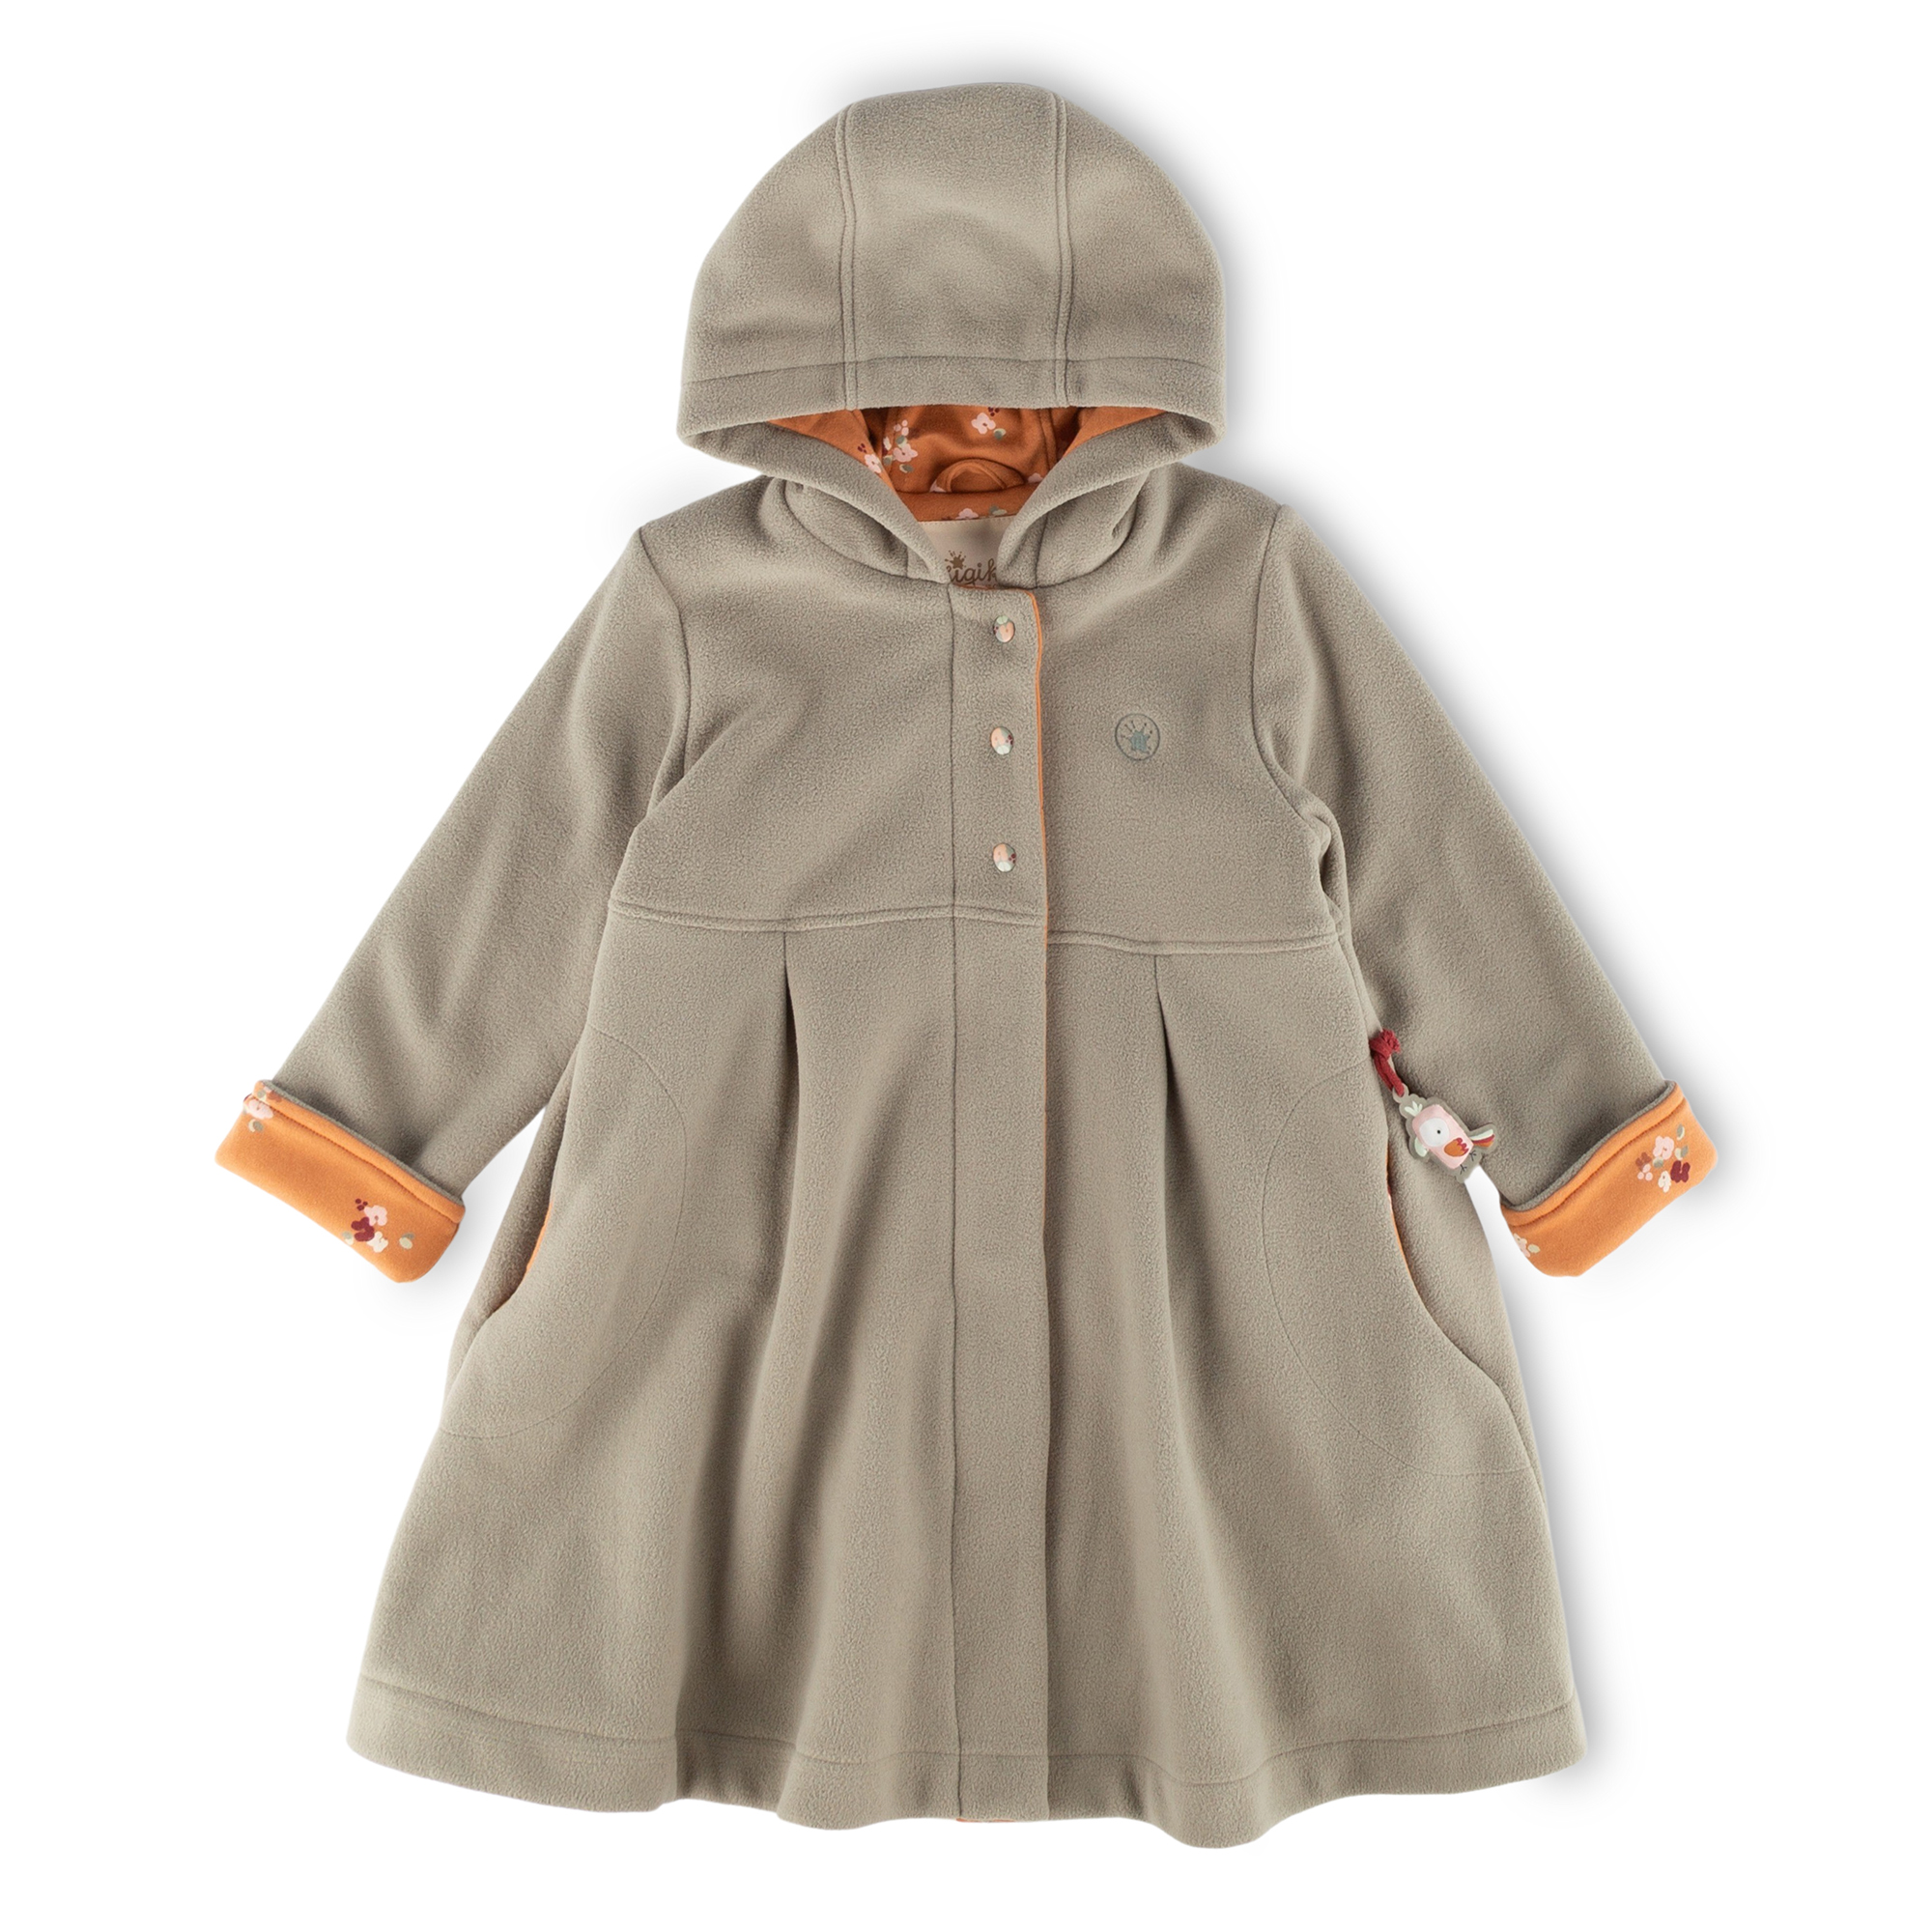 Hooded children's fleece dress coat, pastel green, lined